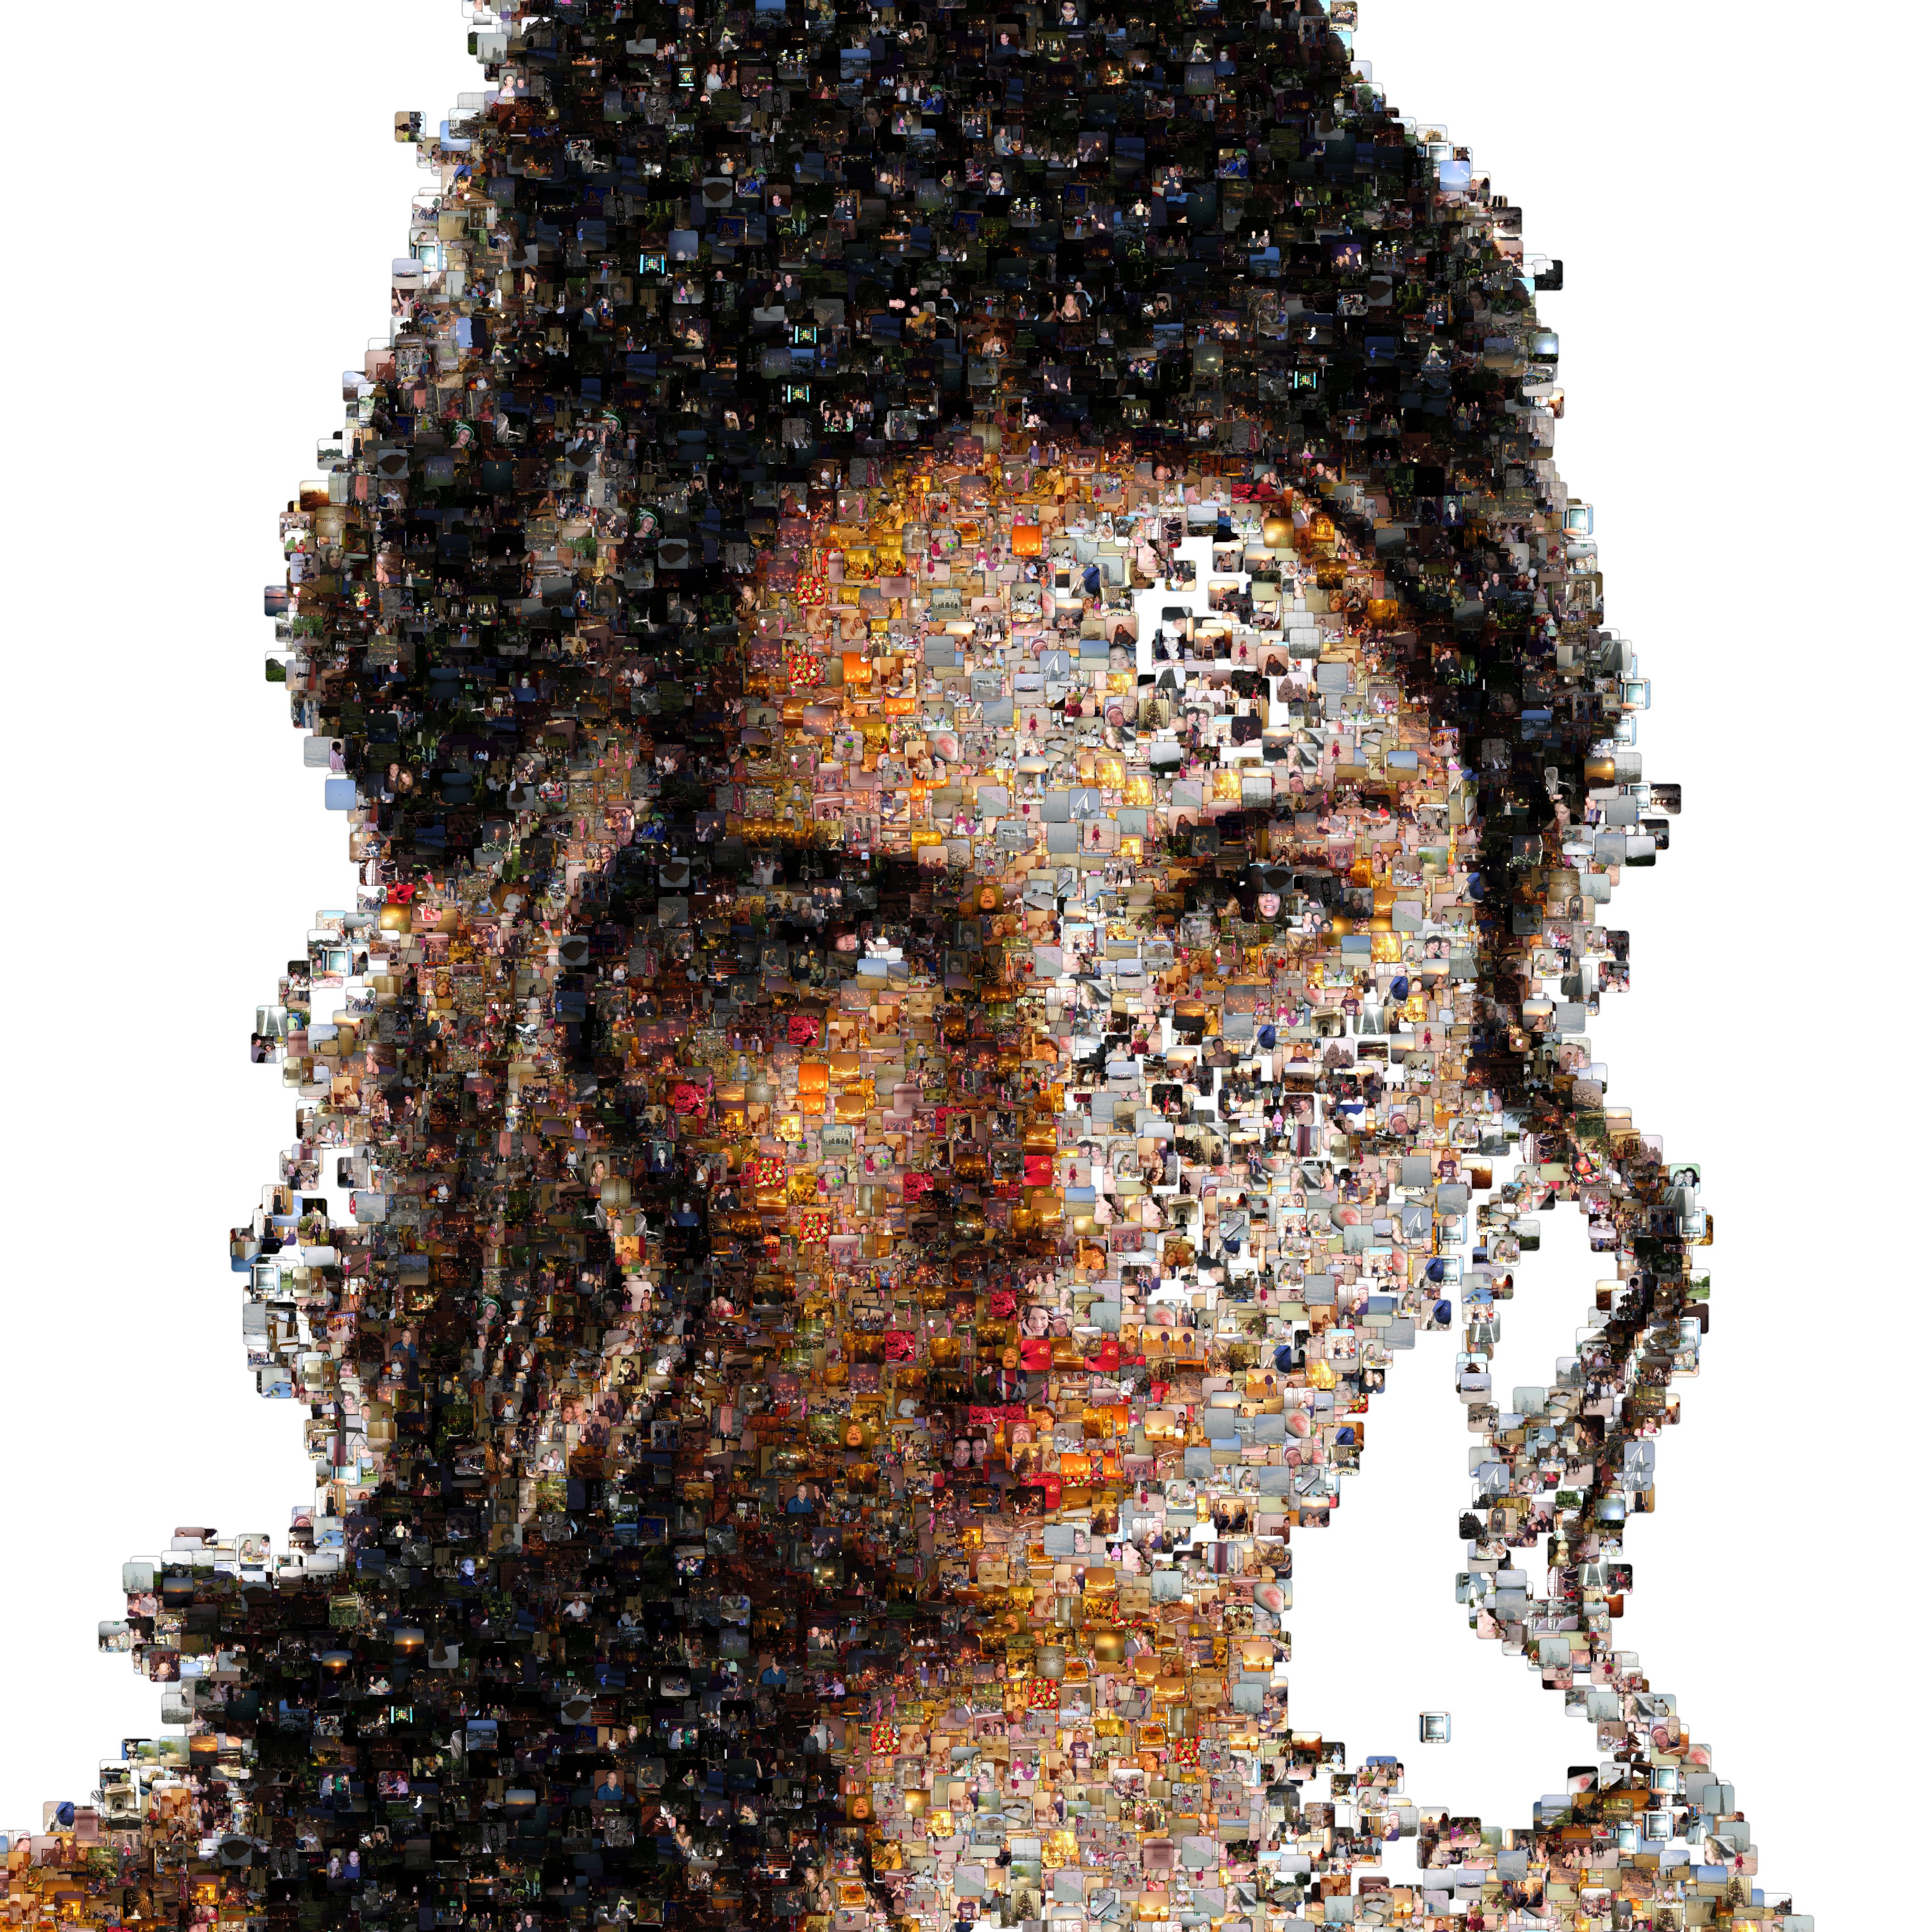 Ana de Armas photo mosaic